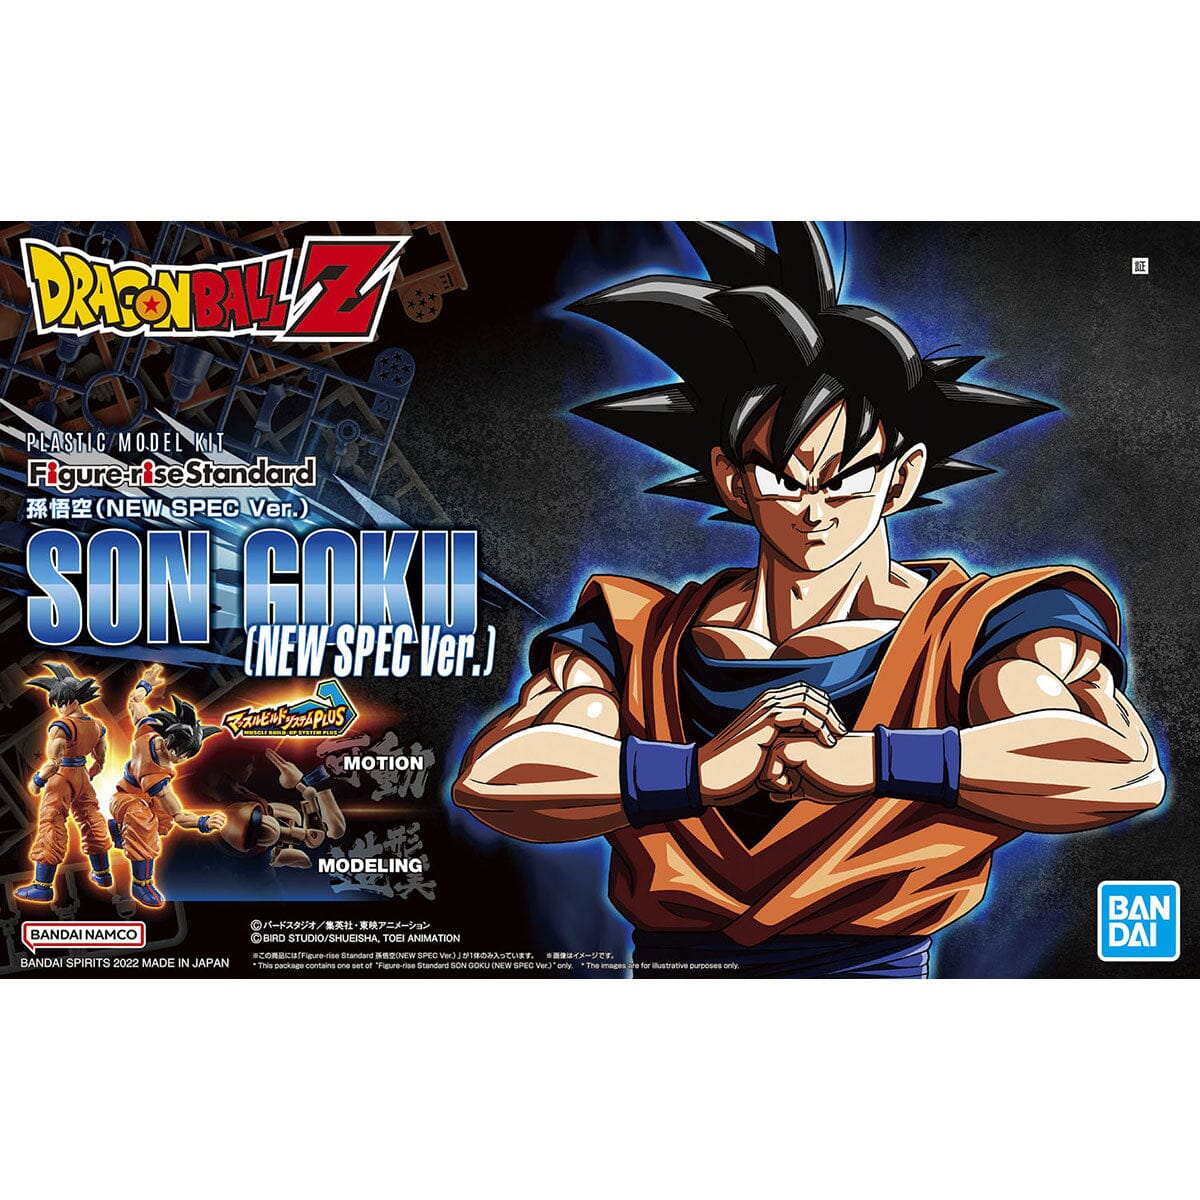 Goku Super Saiyan 5 Version 3 Poster for Sale by AK-store